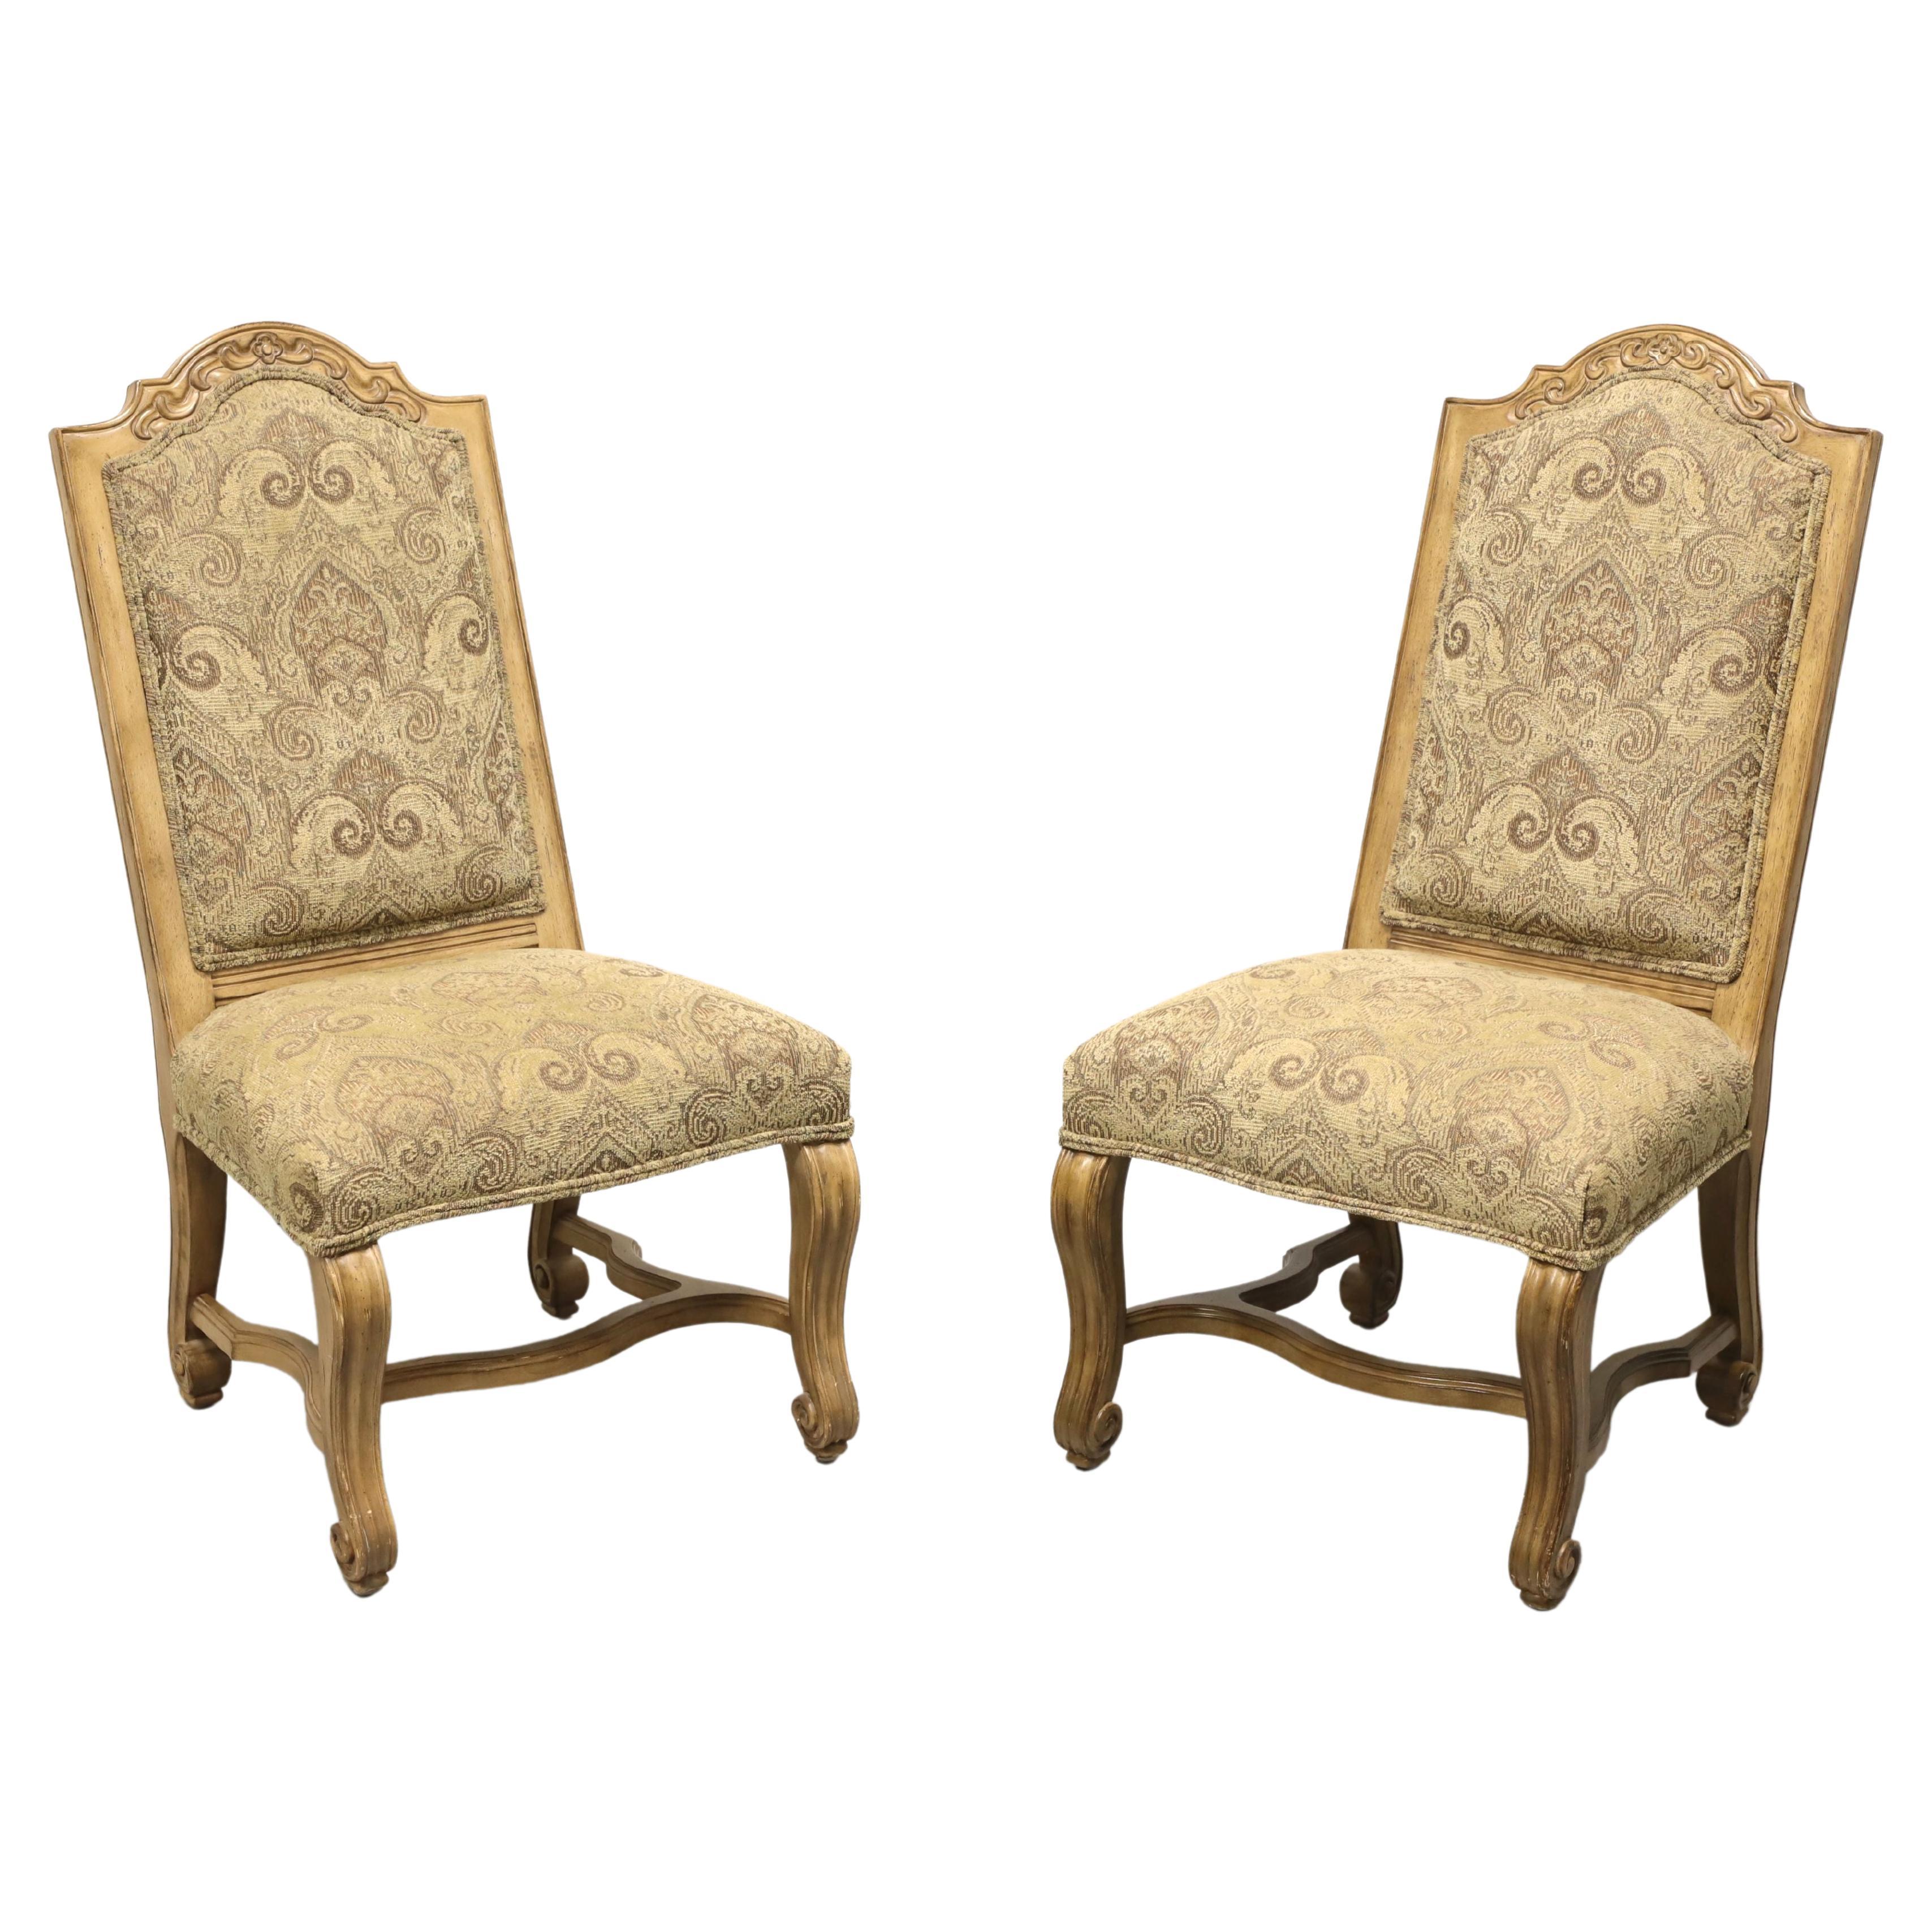 BERNHARDT Rustic Italian Style Dining Side Chairs - Pair B